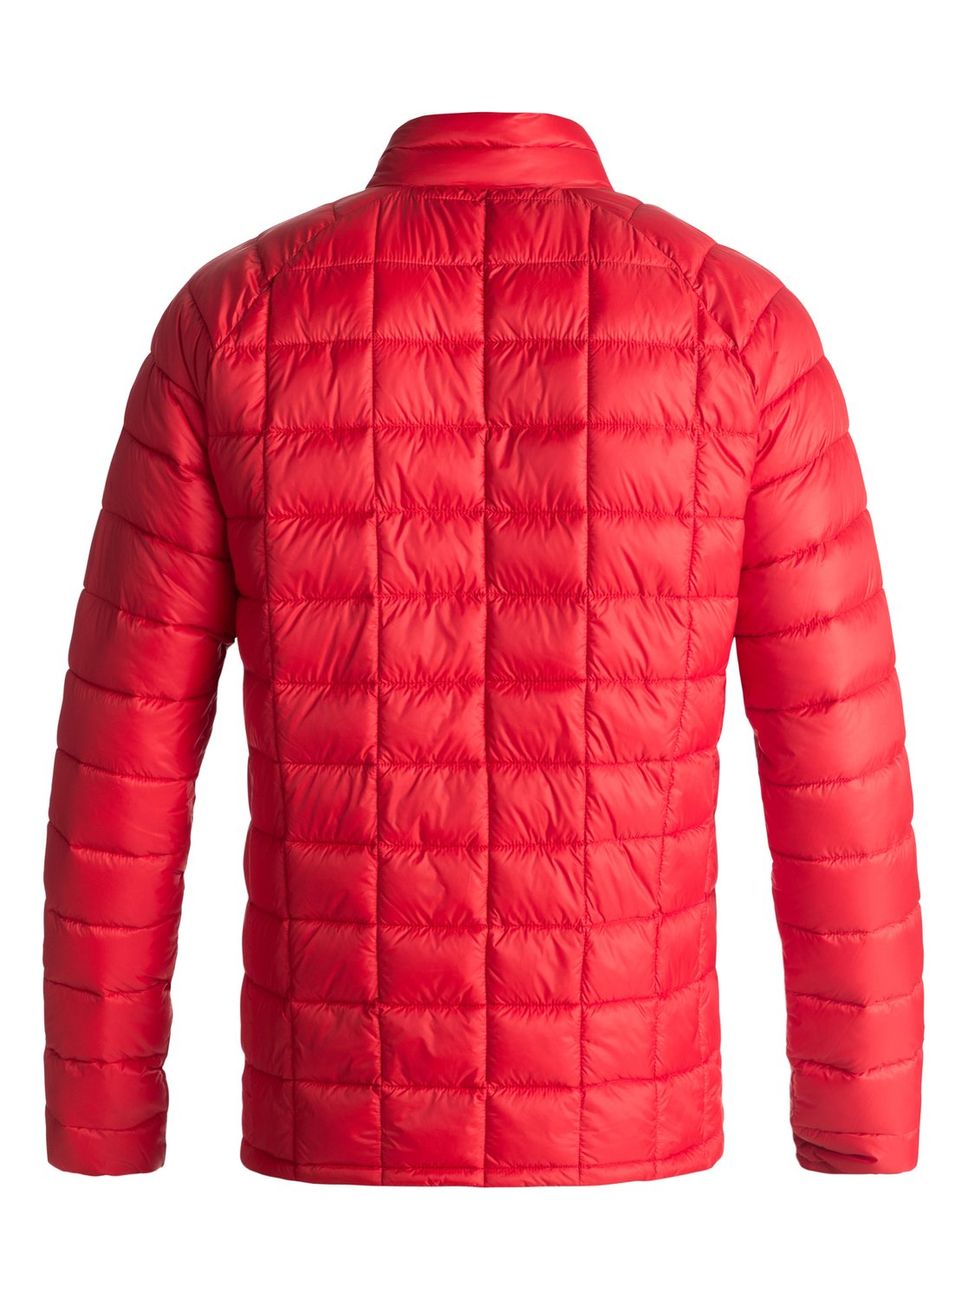 Сноубордическая куртка Quiksilver ( EQYJK03400 ) RELEASE JK M JCKT 2019 4